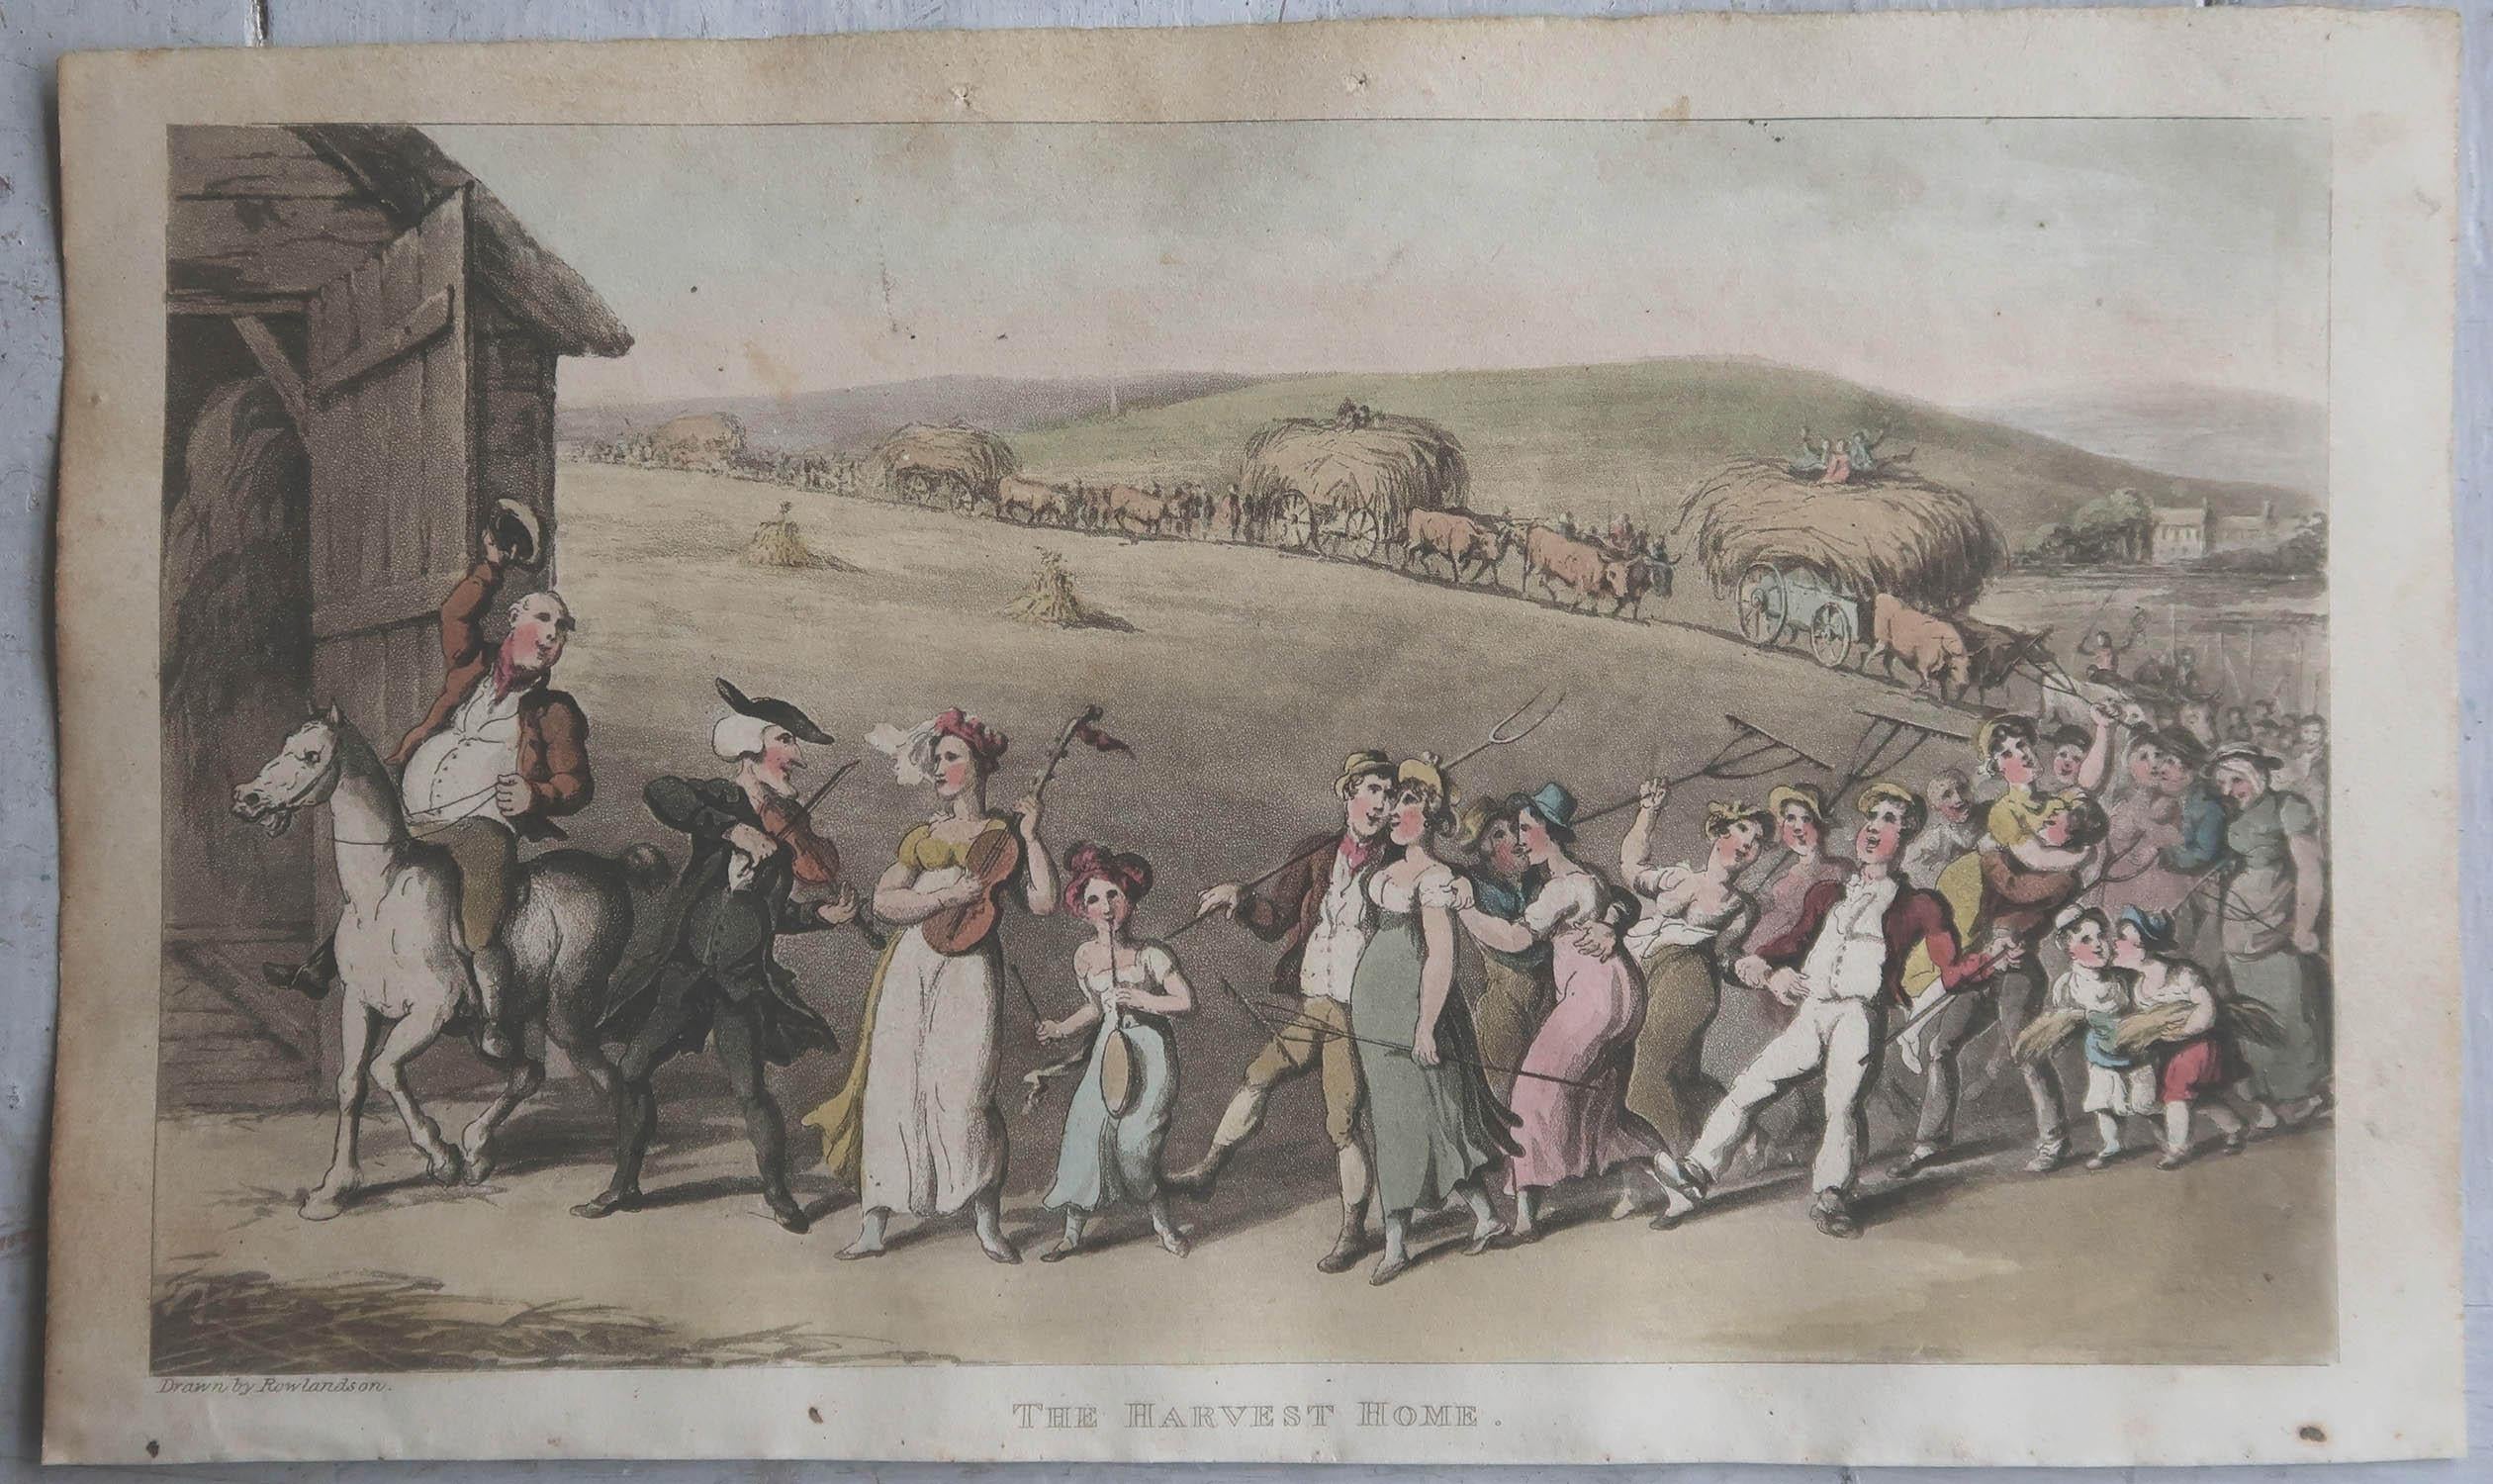 English Original Antique Print After Thomas Rowlandson, Harvest Home, 1820 For Sale